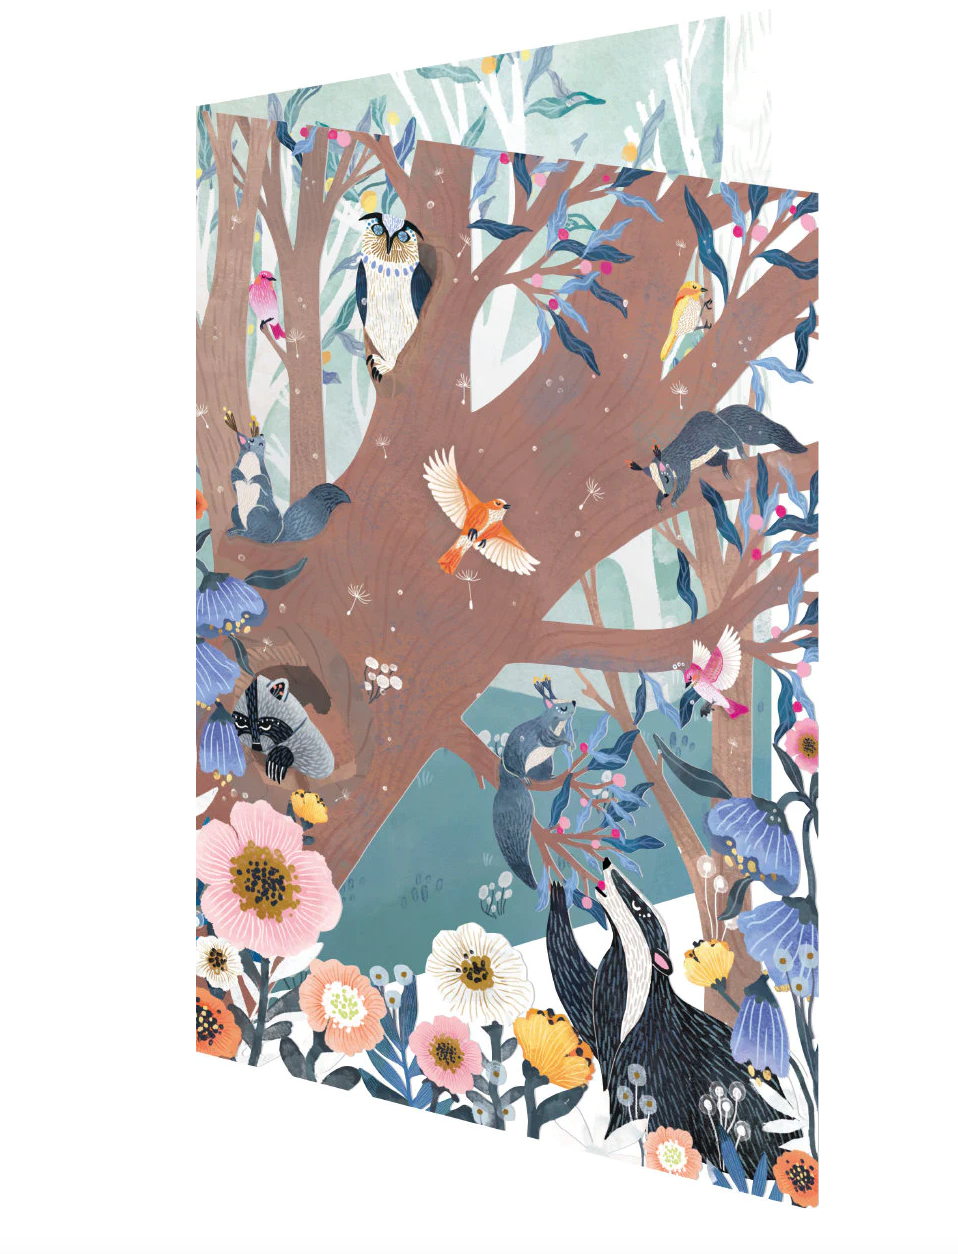 Summer Forest Animals Lasercut Card by Antoanna Oreski GC2262